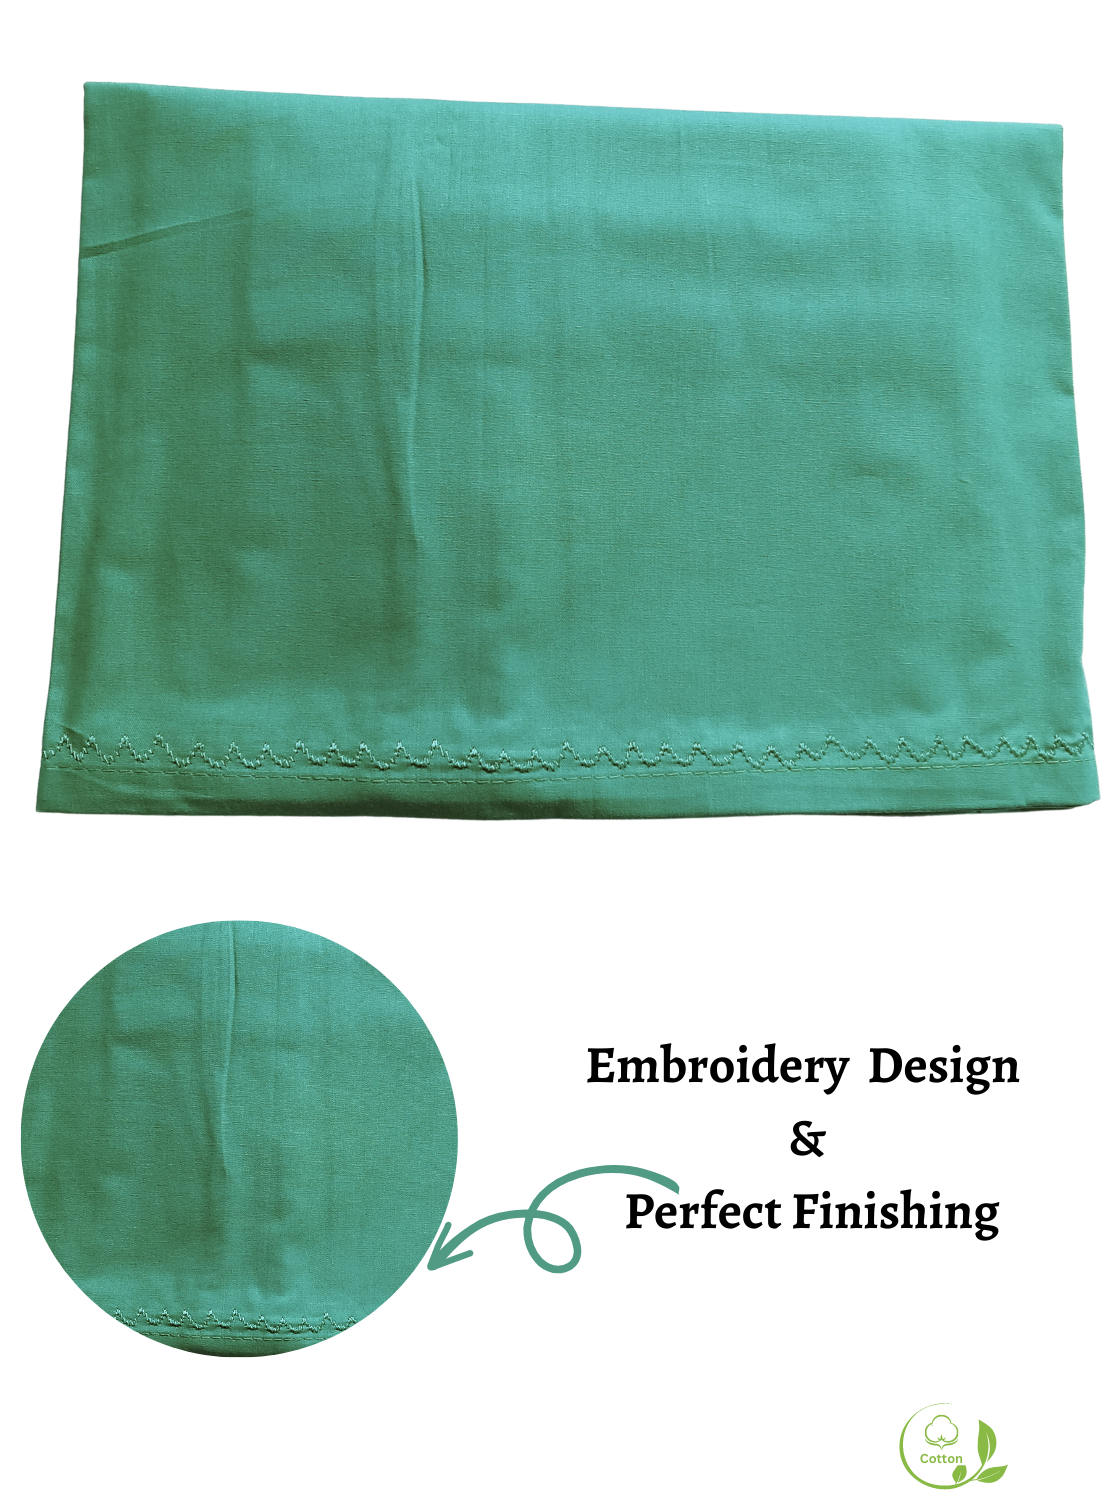 New Arrivals MANGAI Embroidery Superior Cotton Petticoats - 7 Part